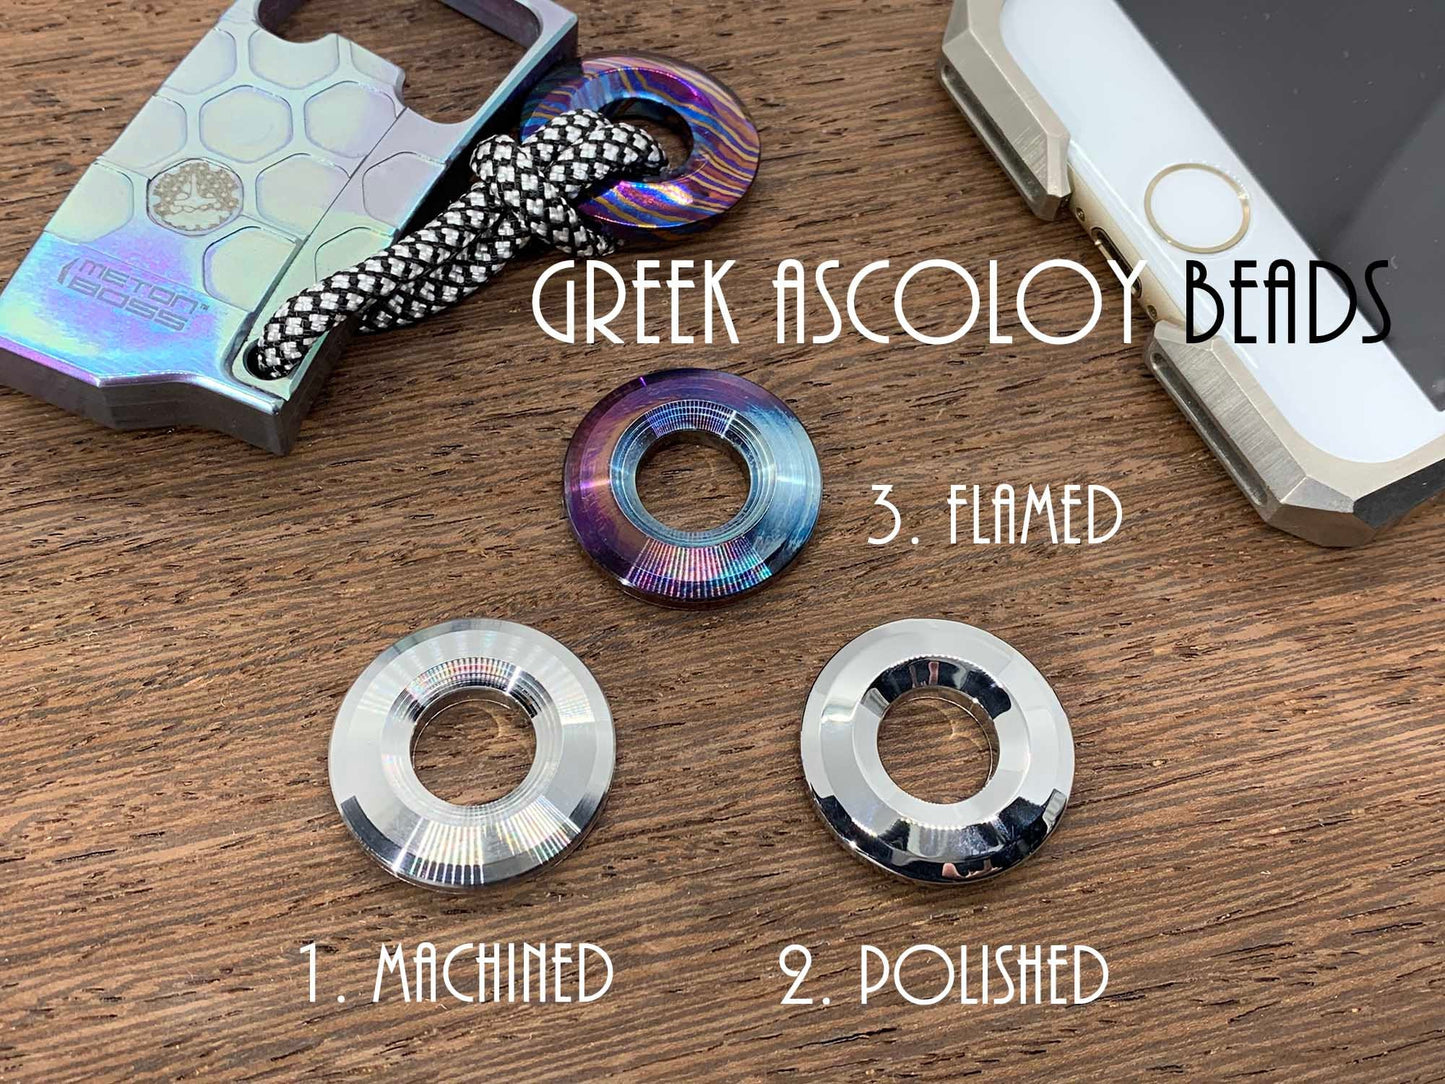 GREEK Ascoloy lanyard bead Paracord bead Dog tag